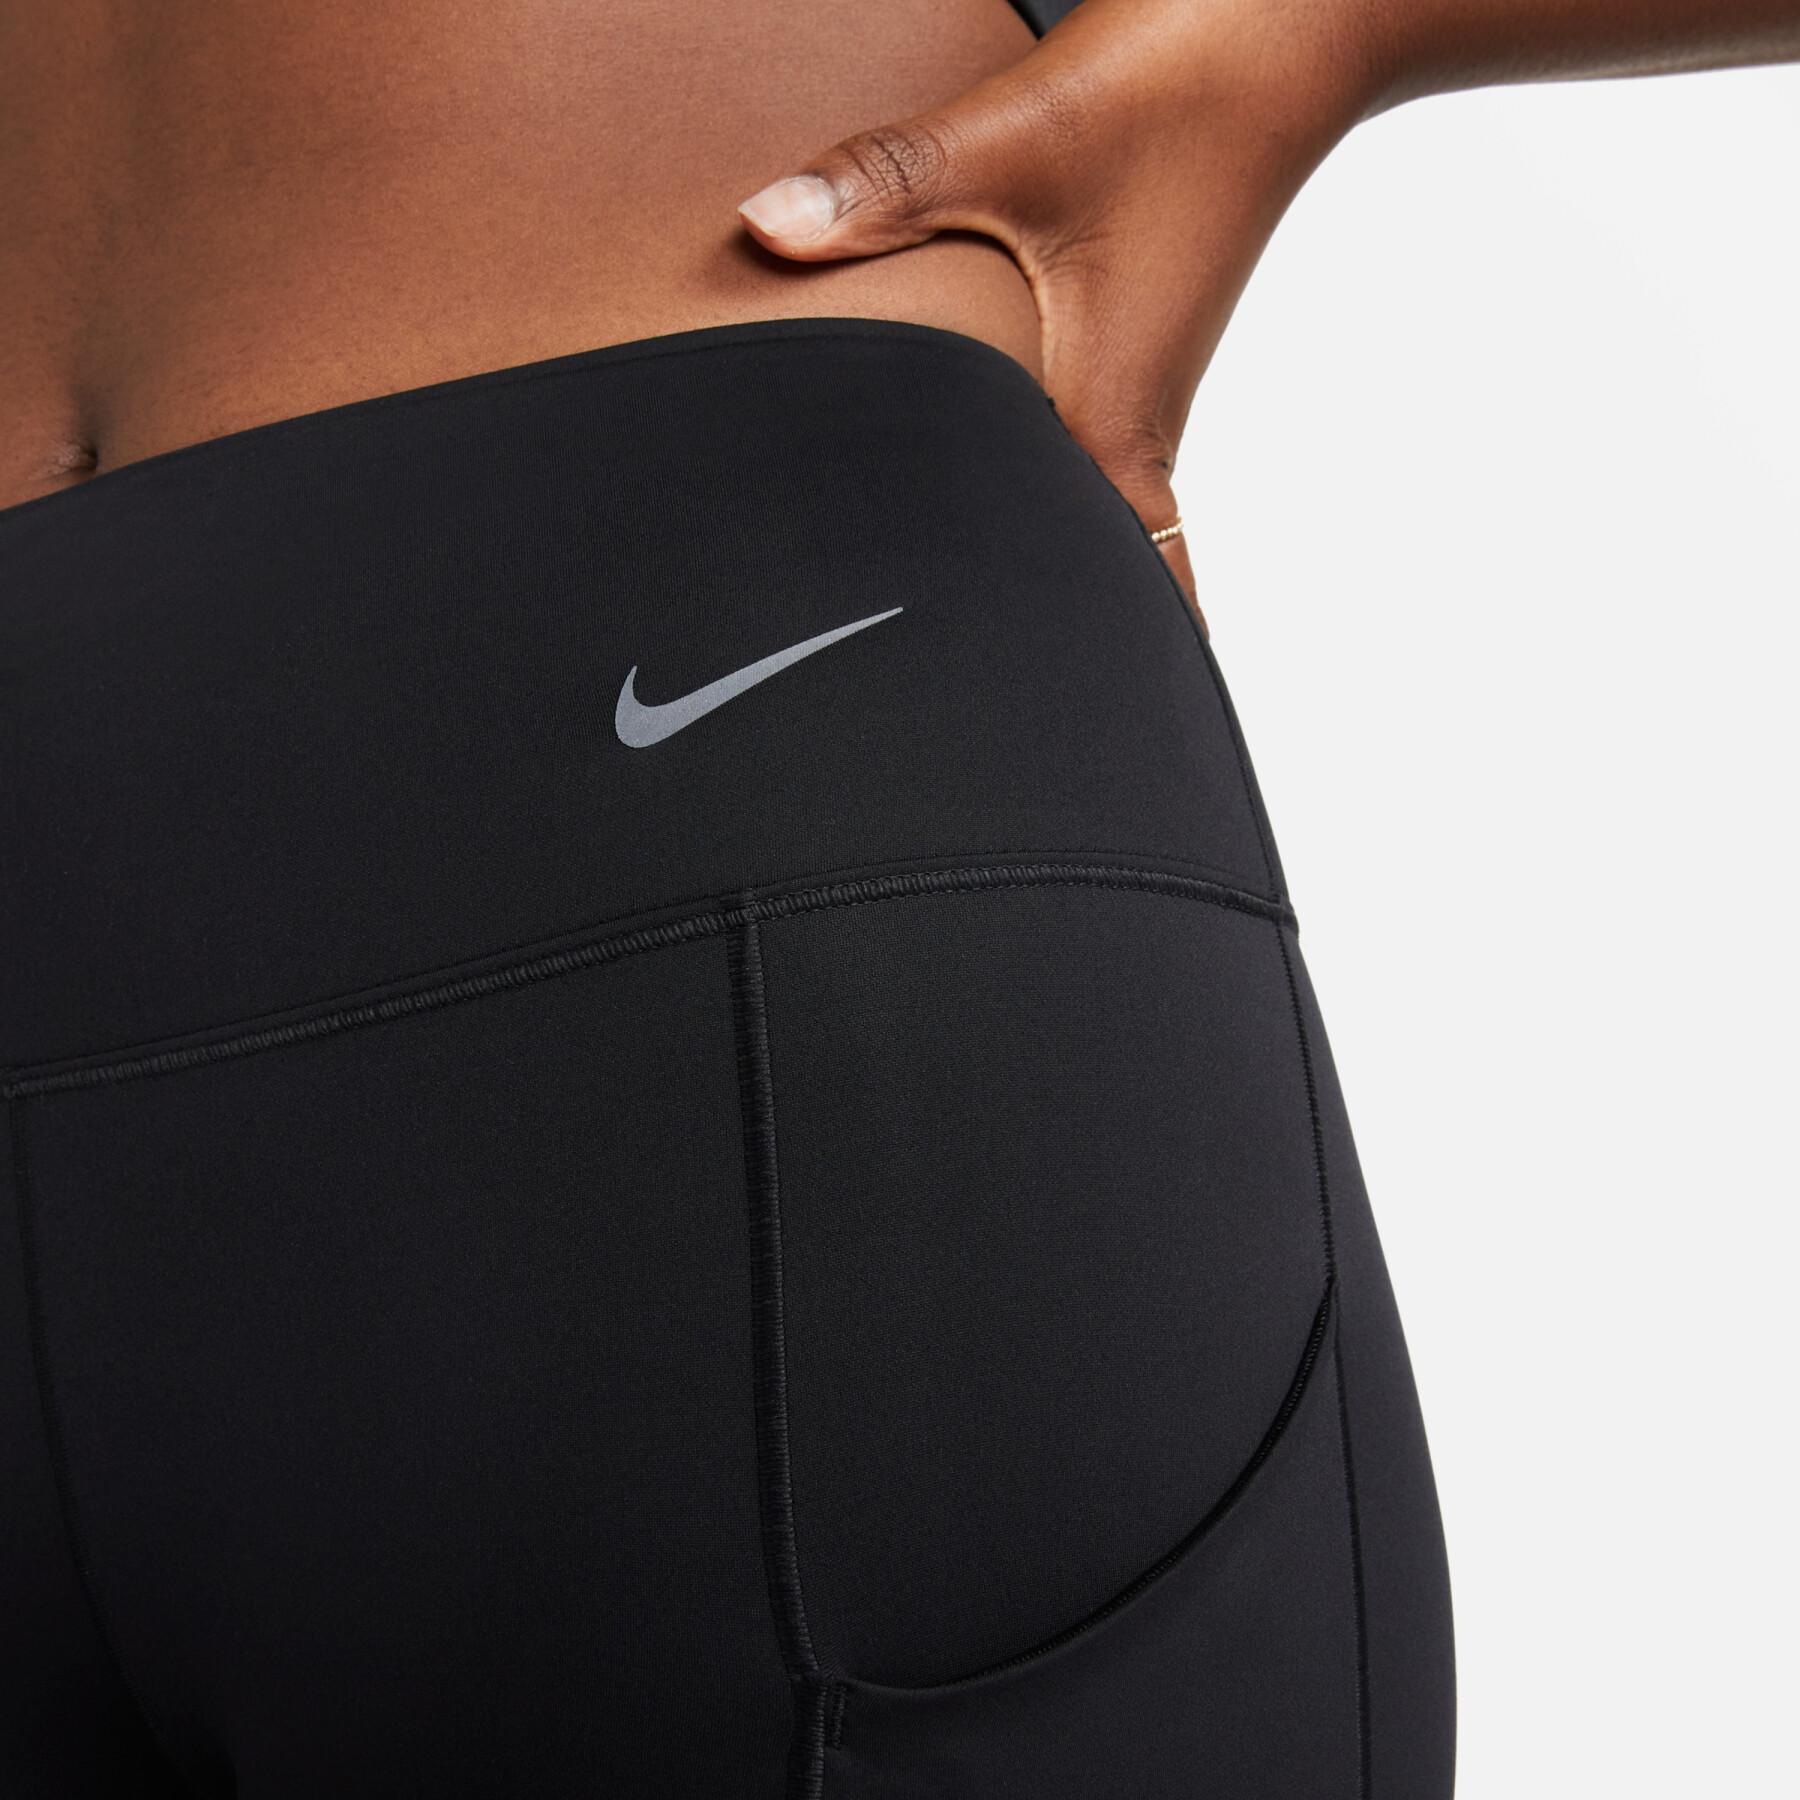 Legging woman Nike Dri-FIT Go